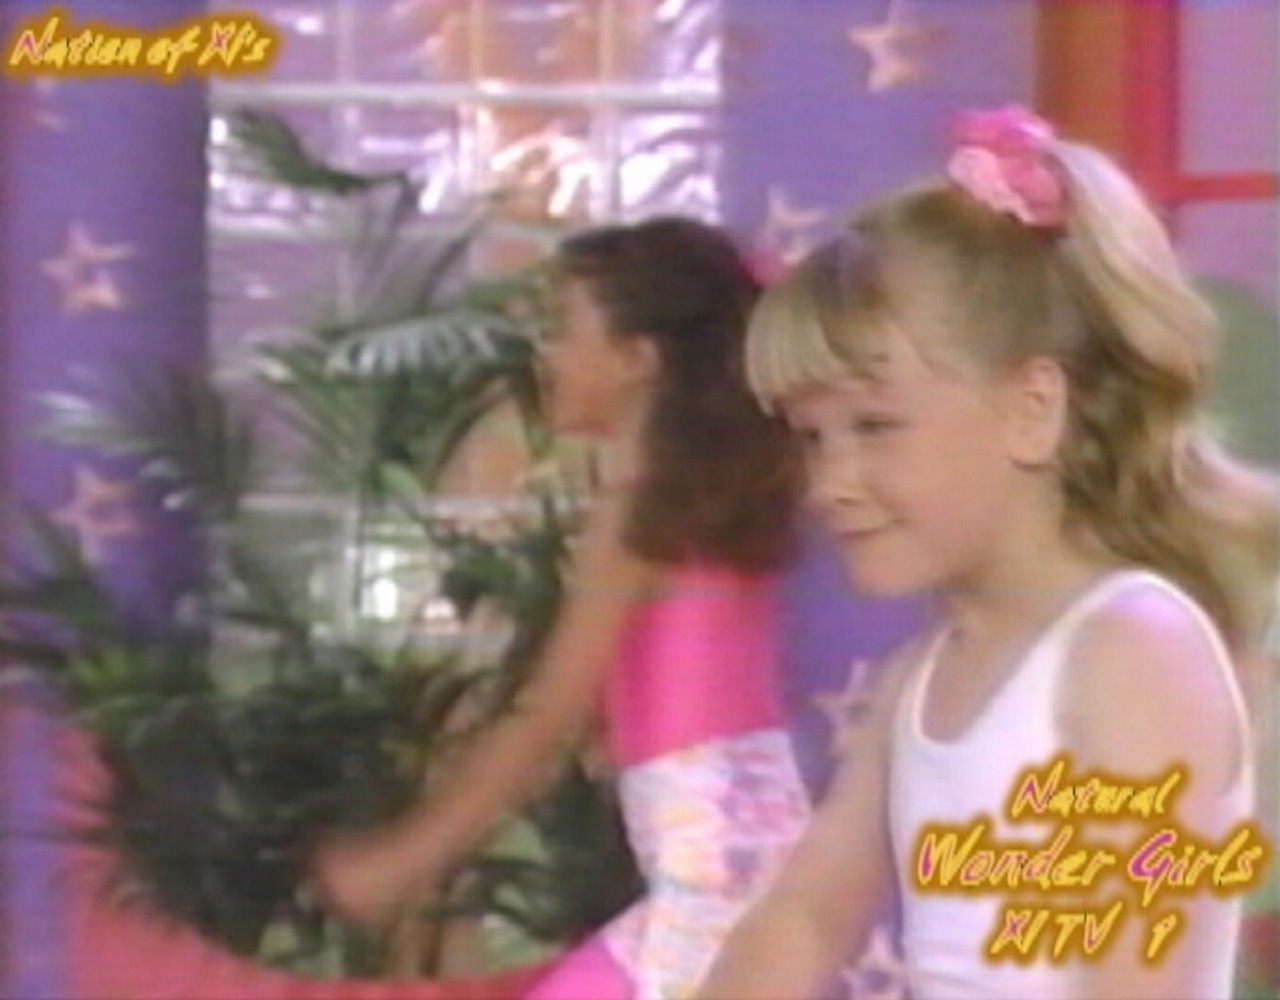 Natural Wonder Girls! Dance Workout! "Barbie Gets Nine Inch Nailed!" - Holly Childers! 